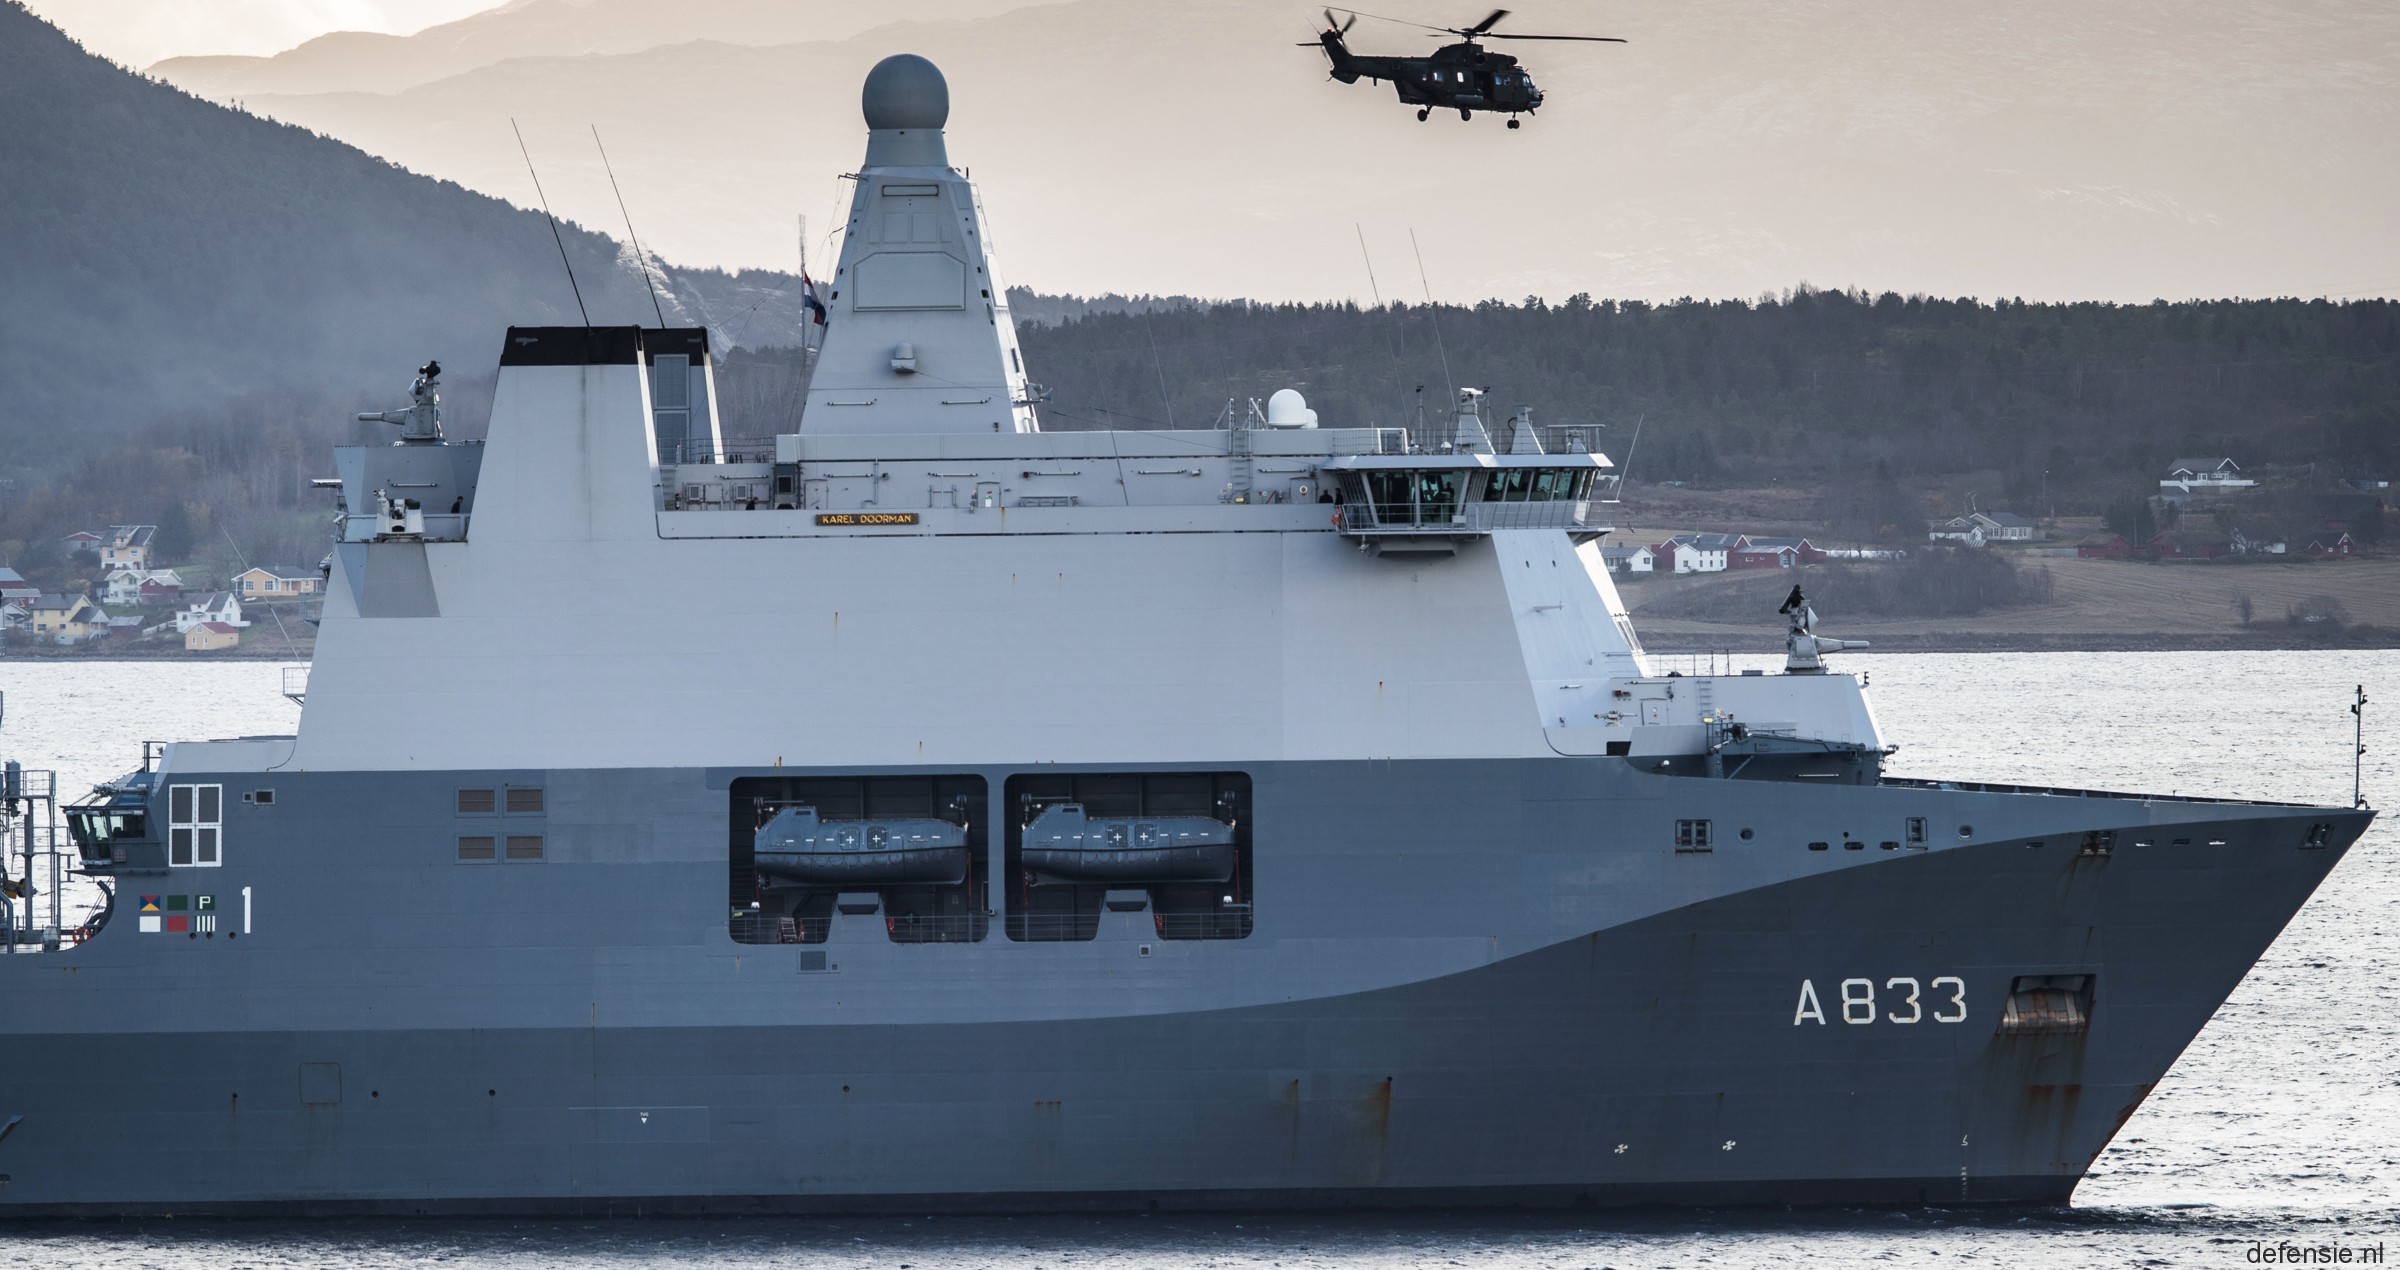 a-833 hnlms karel doorman joint support ship royal netherlands navy koninklijke marine 36